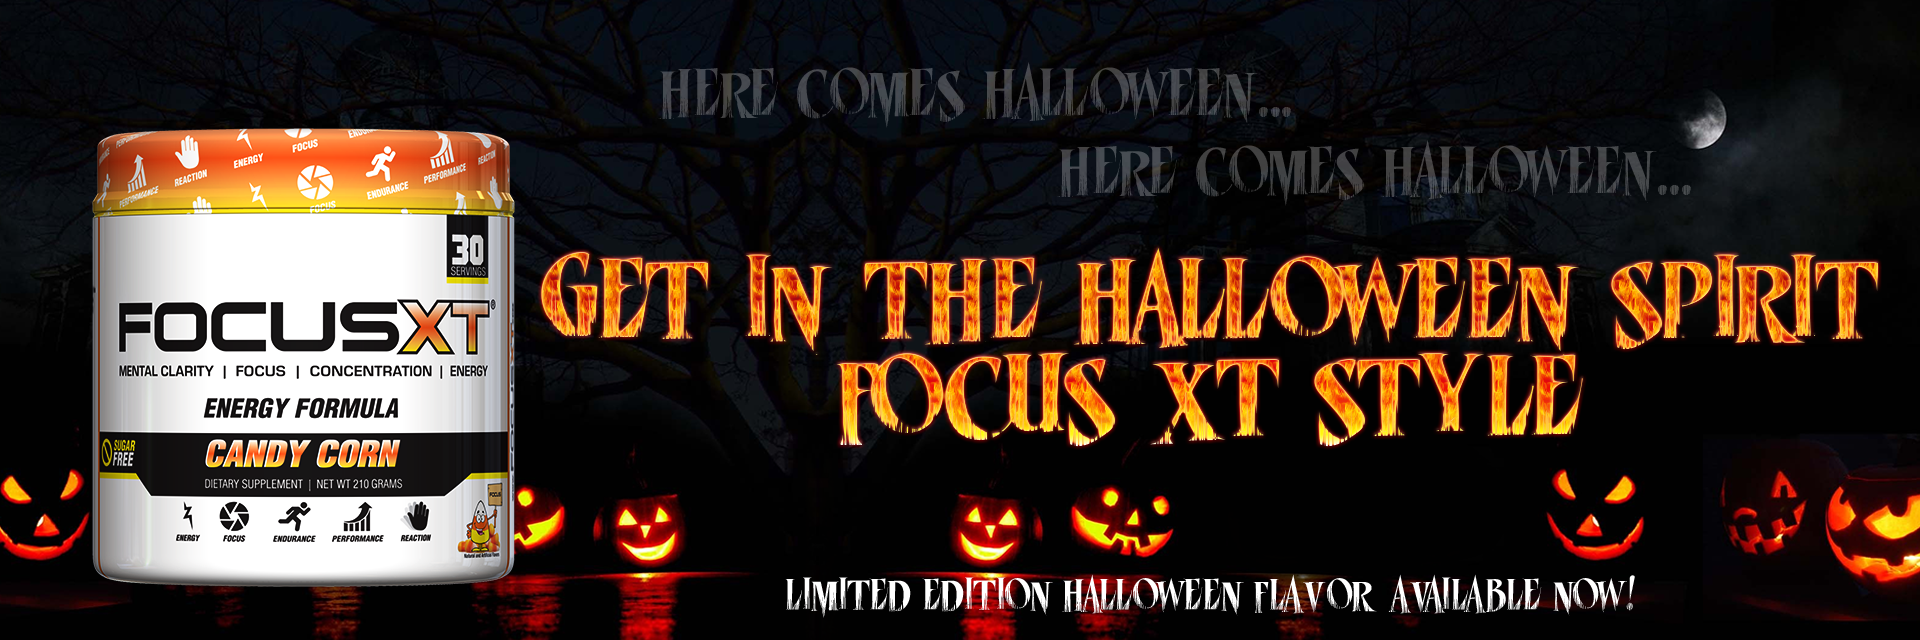 SNS Focus XT Halloween